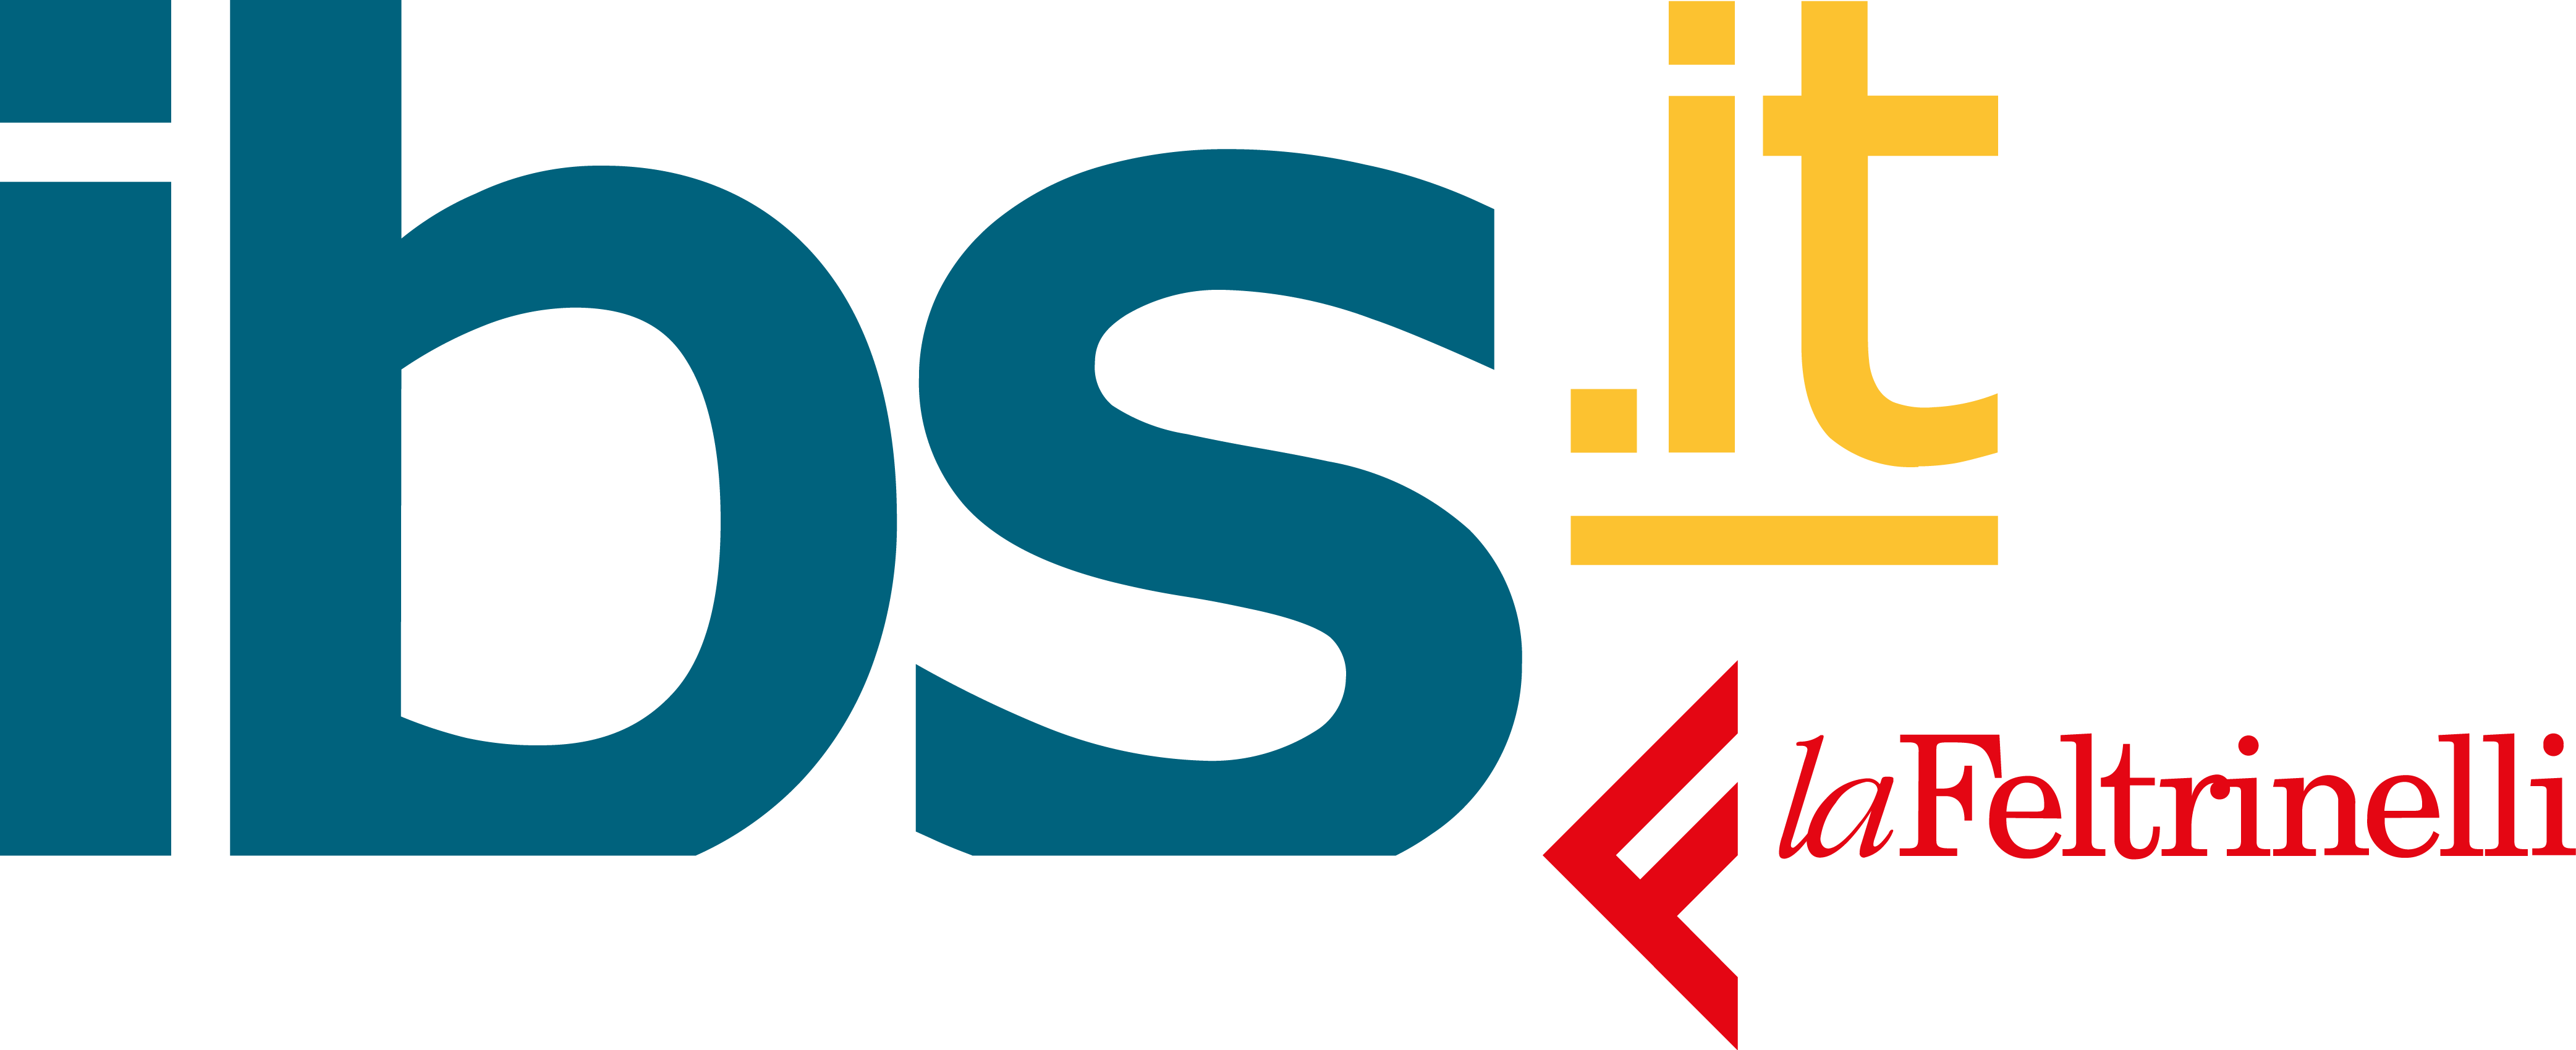 ibs logo 1